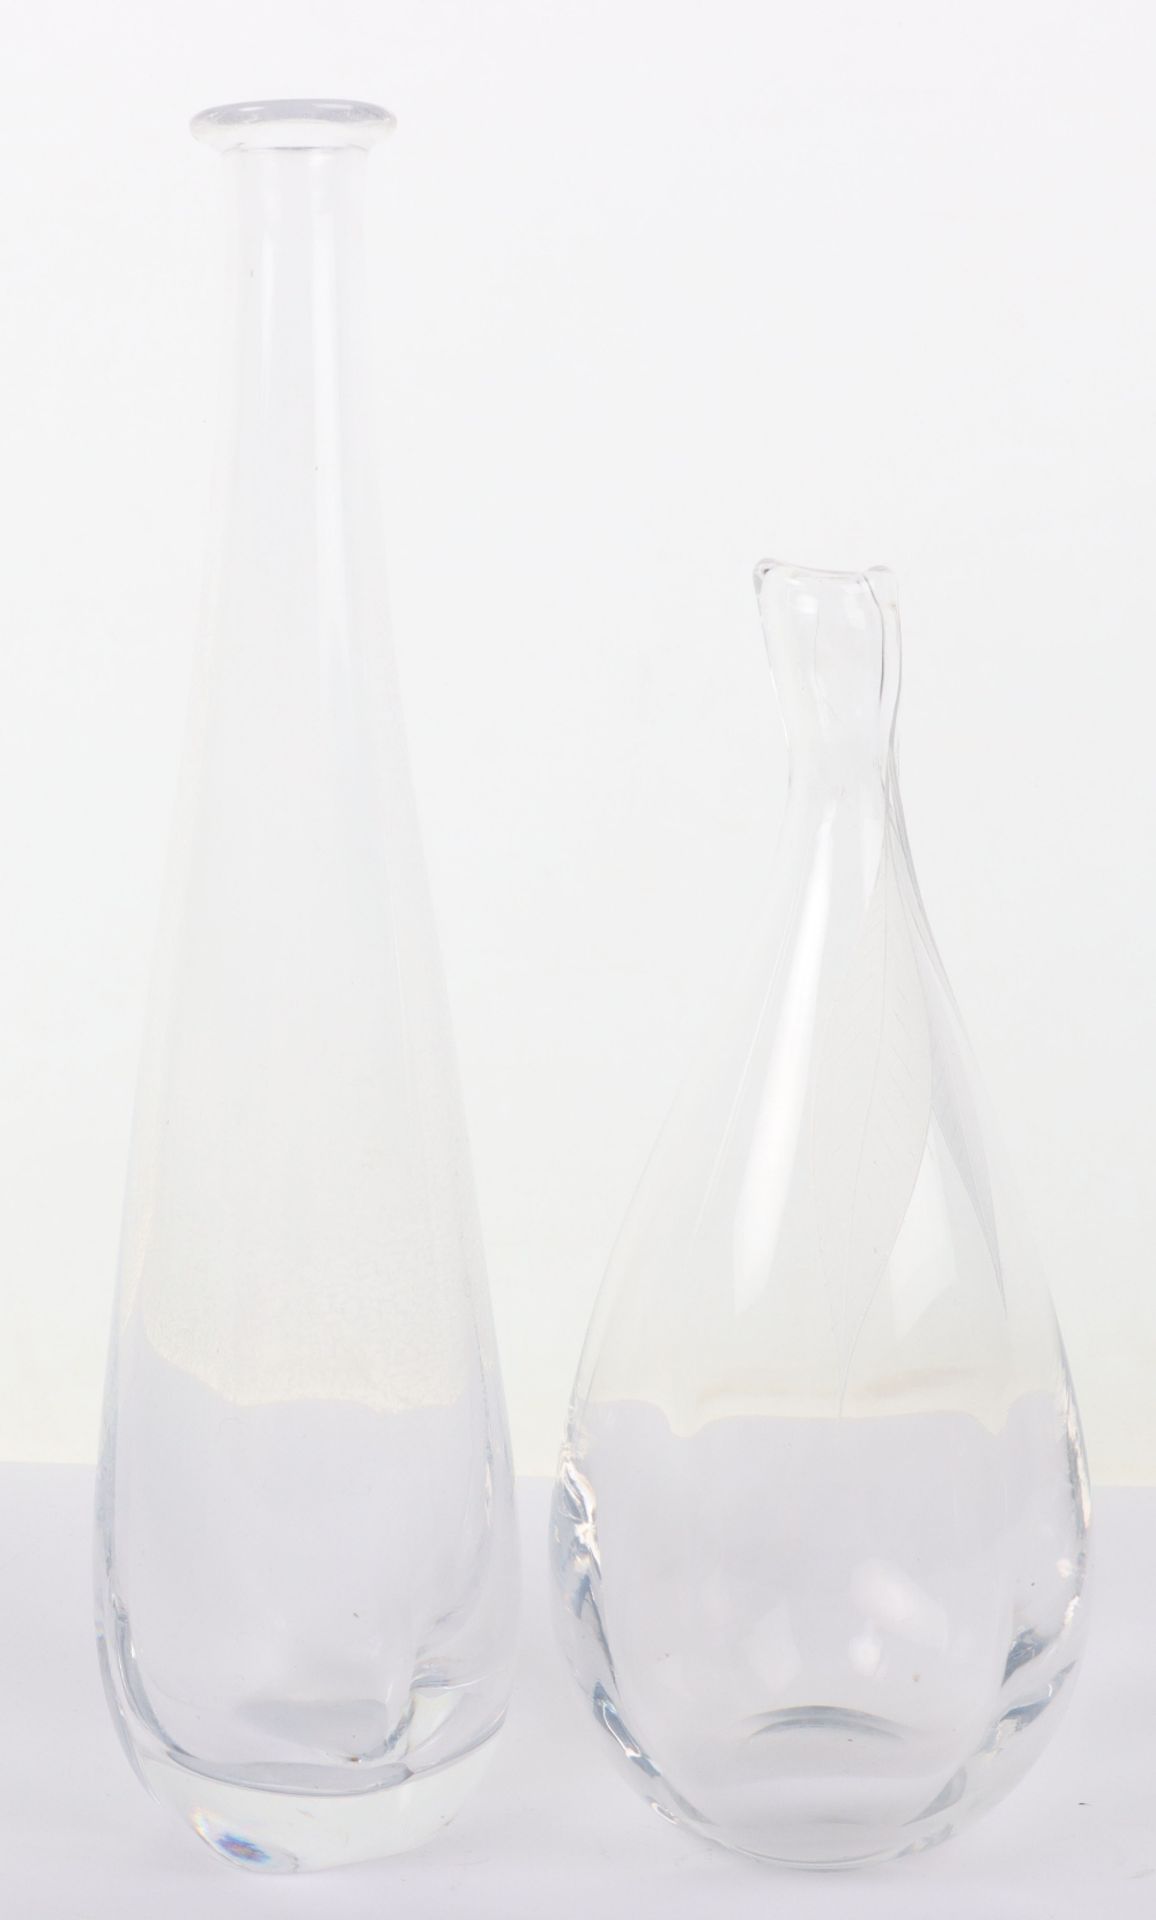 Two Kosta LG glass vases - Image 2 of 4